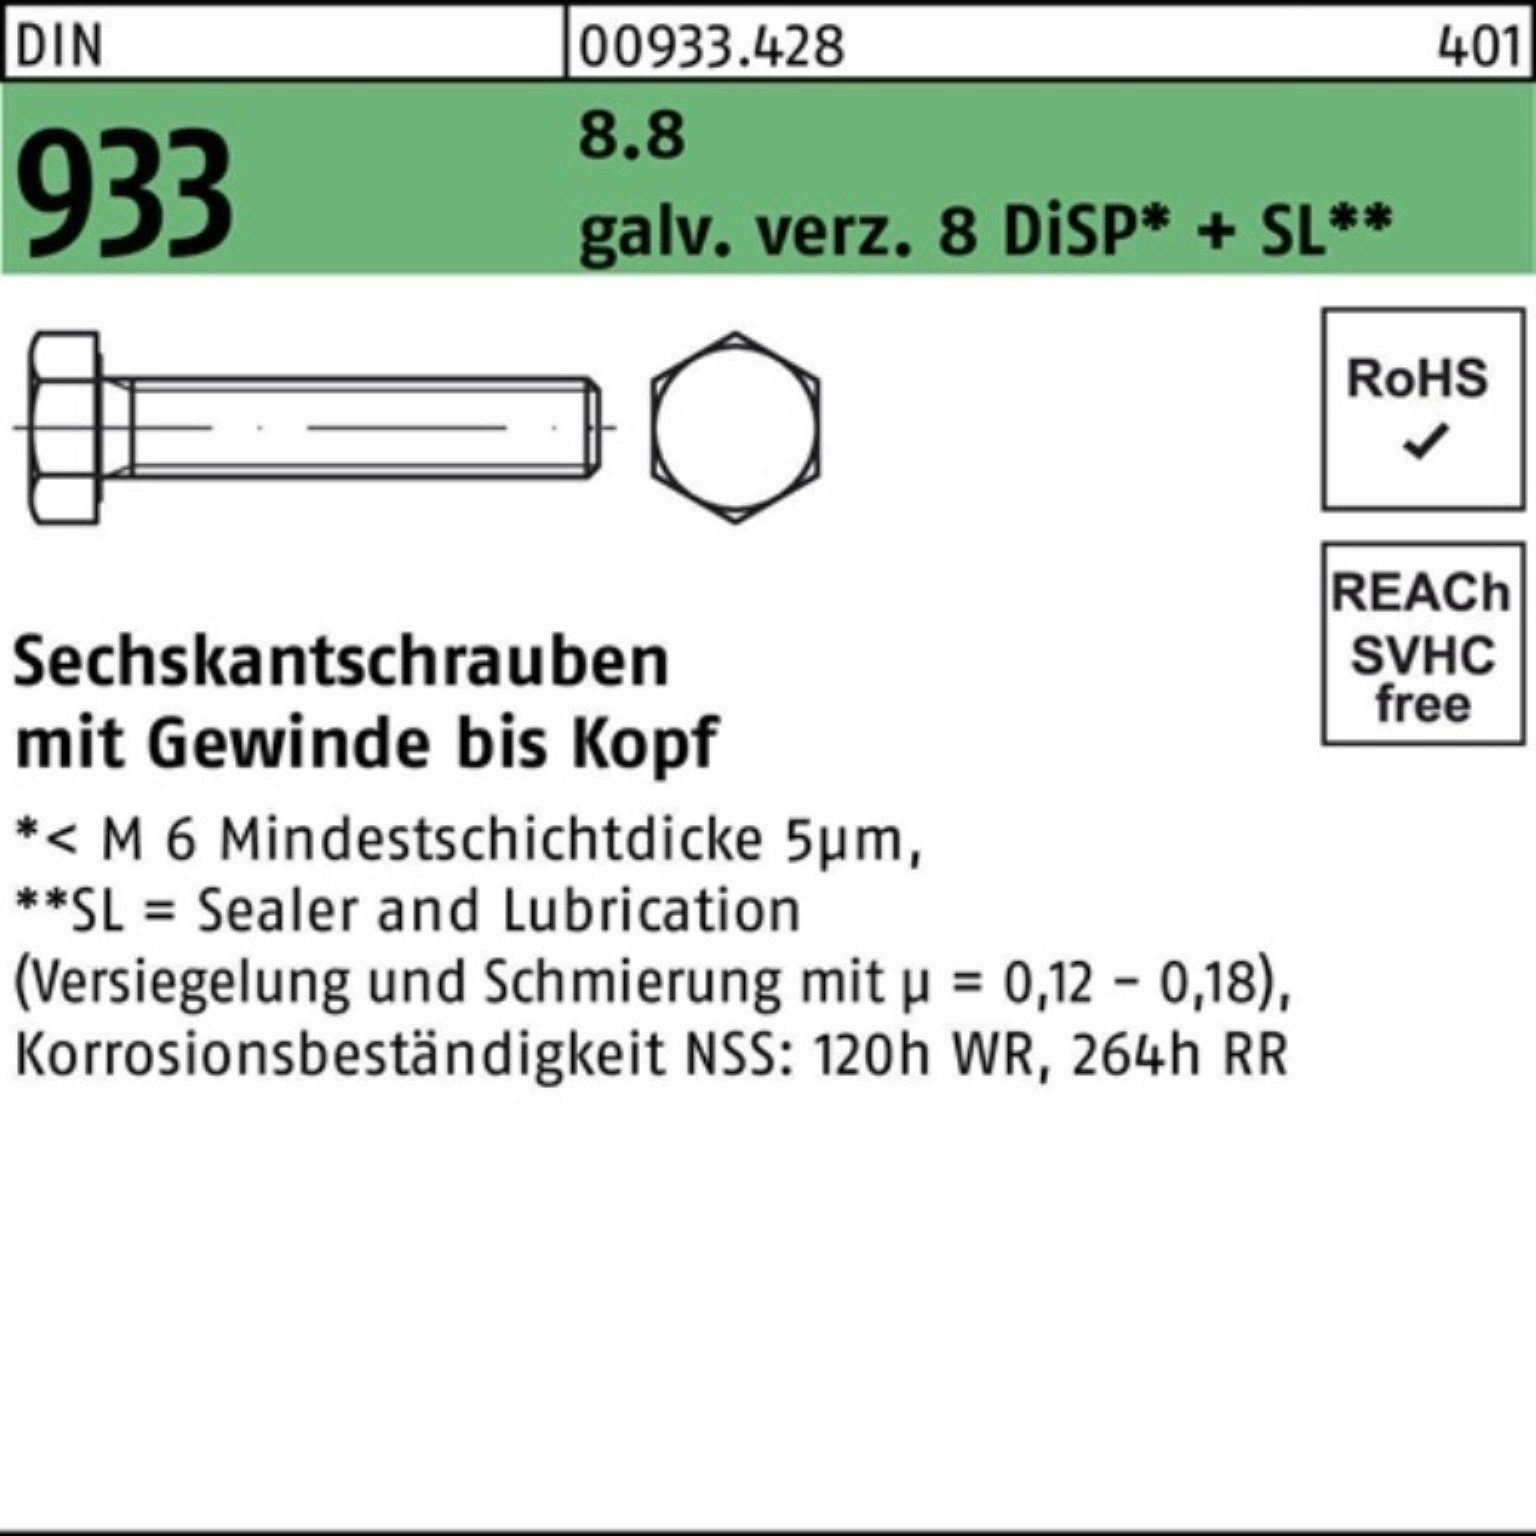 Reyher Sechskantschraube 100er Pack Sechskantschraube DIN 933 VG M16x 75 8.8 gal Zn 8 DiSP + SL